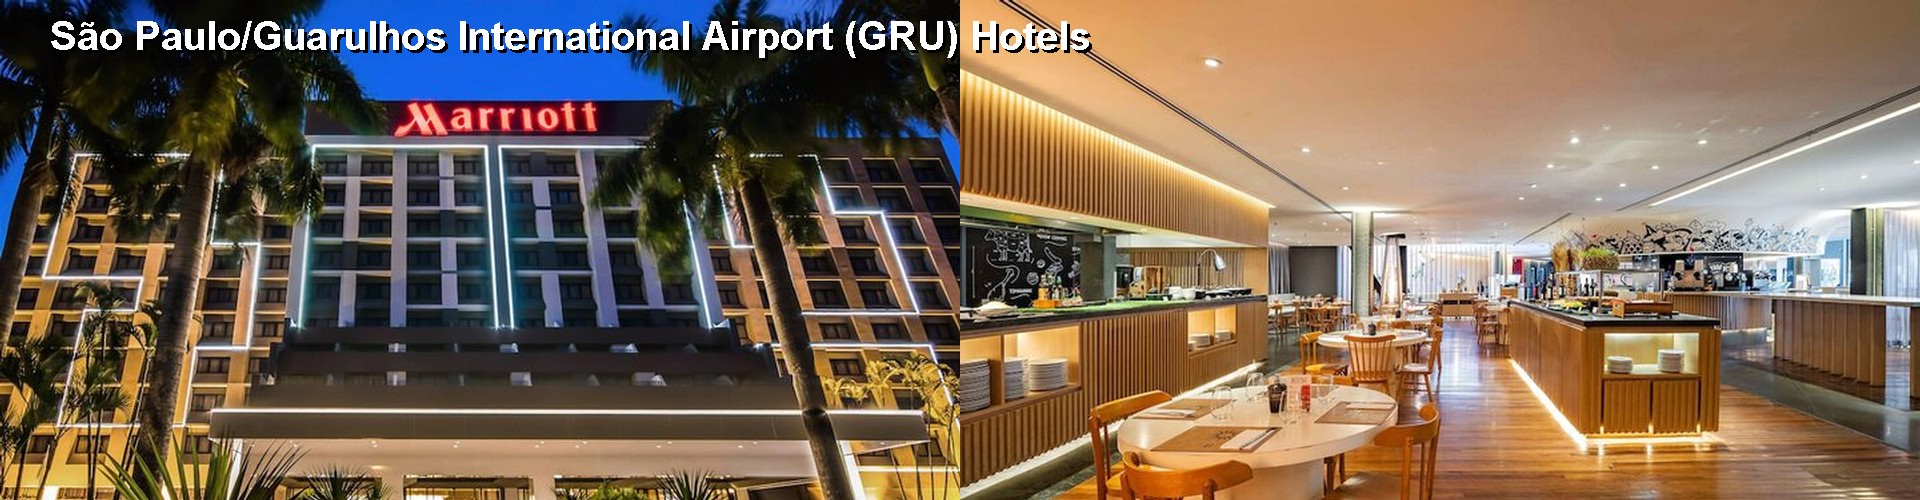 5 Best Hotels near São Paulo/Guarulhos International Airport (GRU)